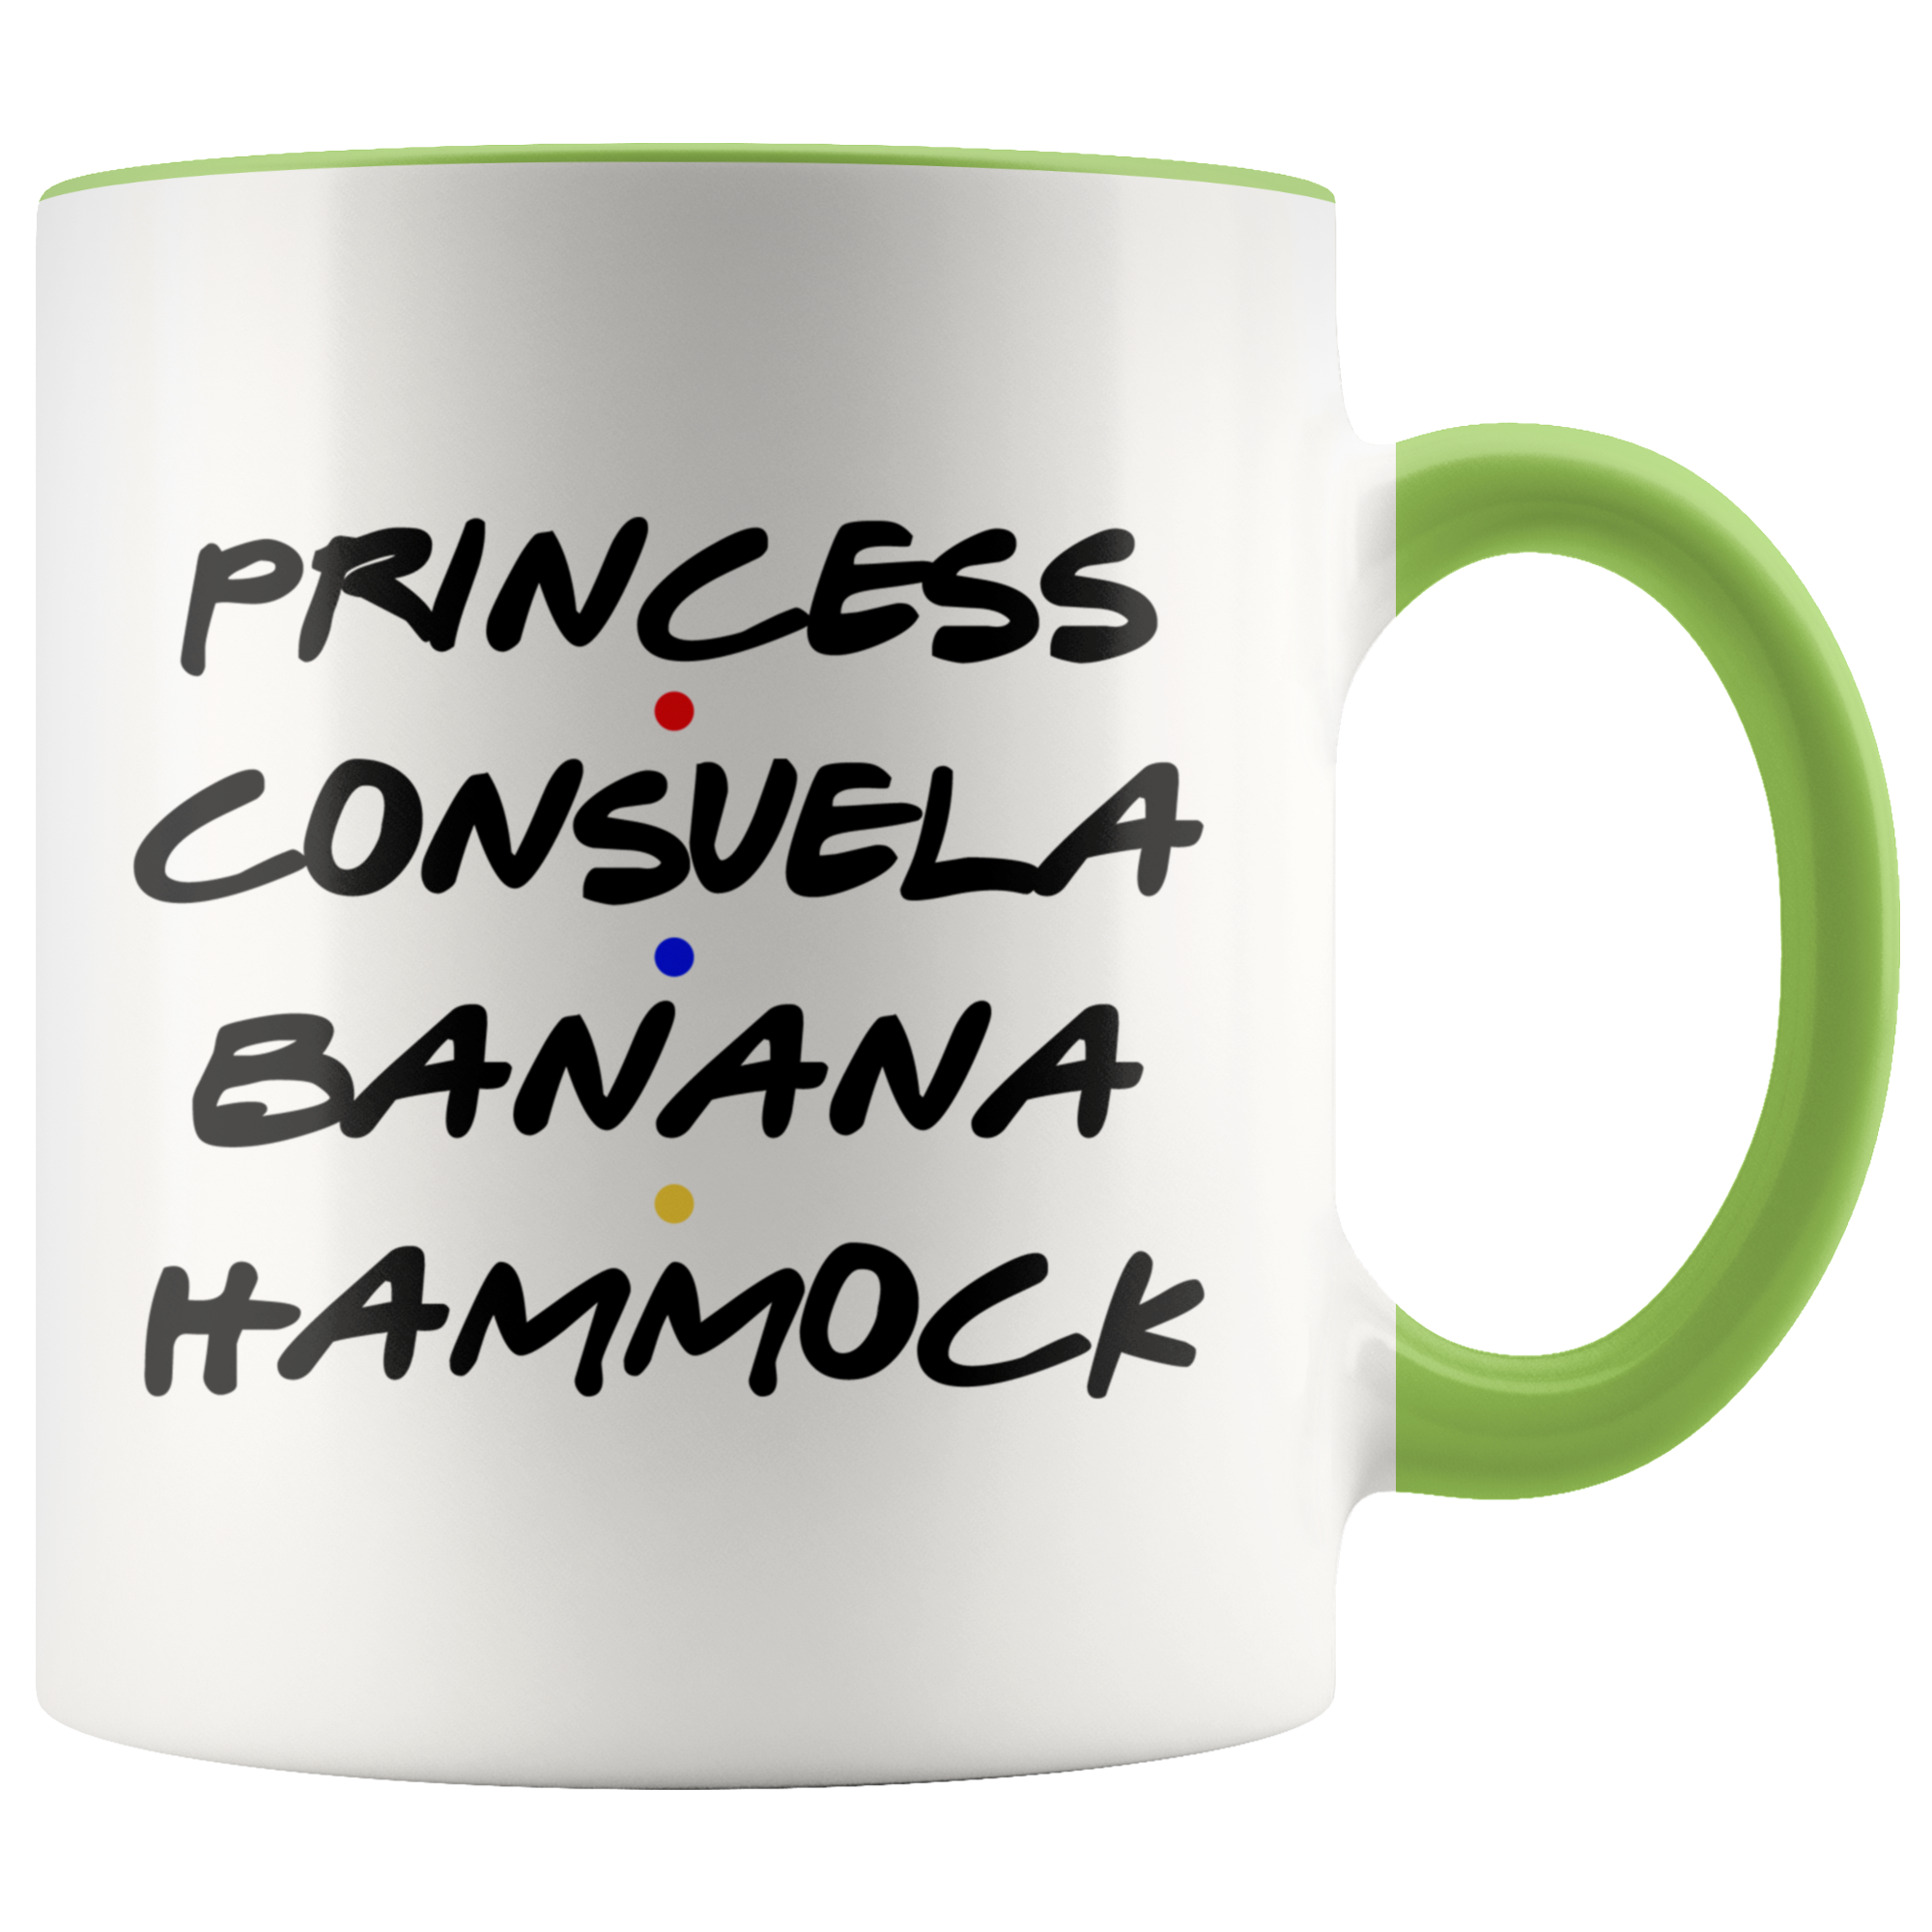 Princess Consuela Accent Mug - Guestbookery